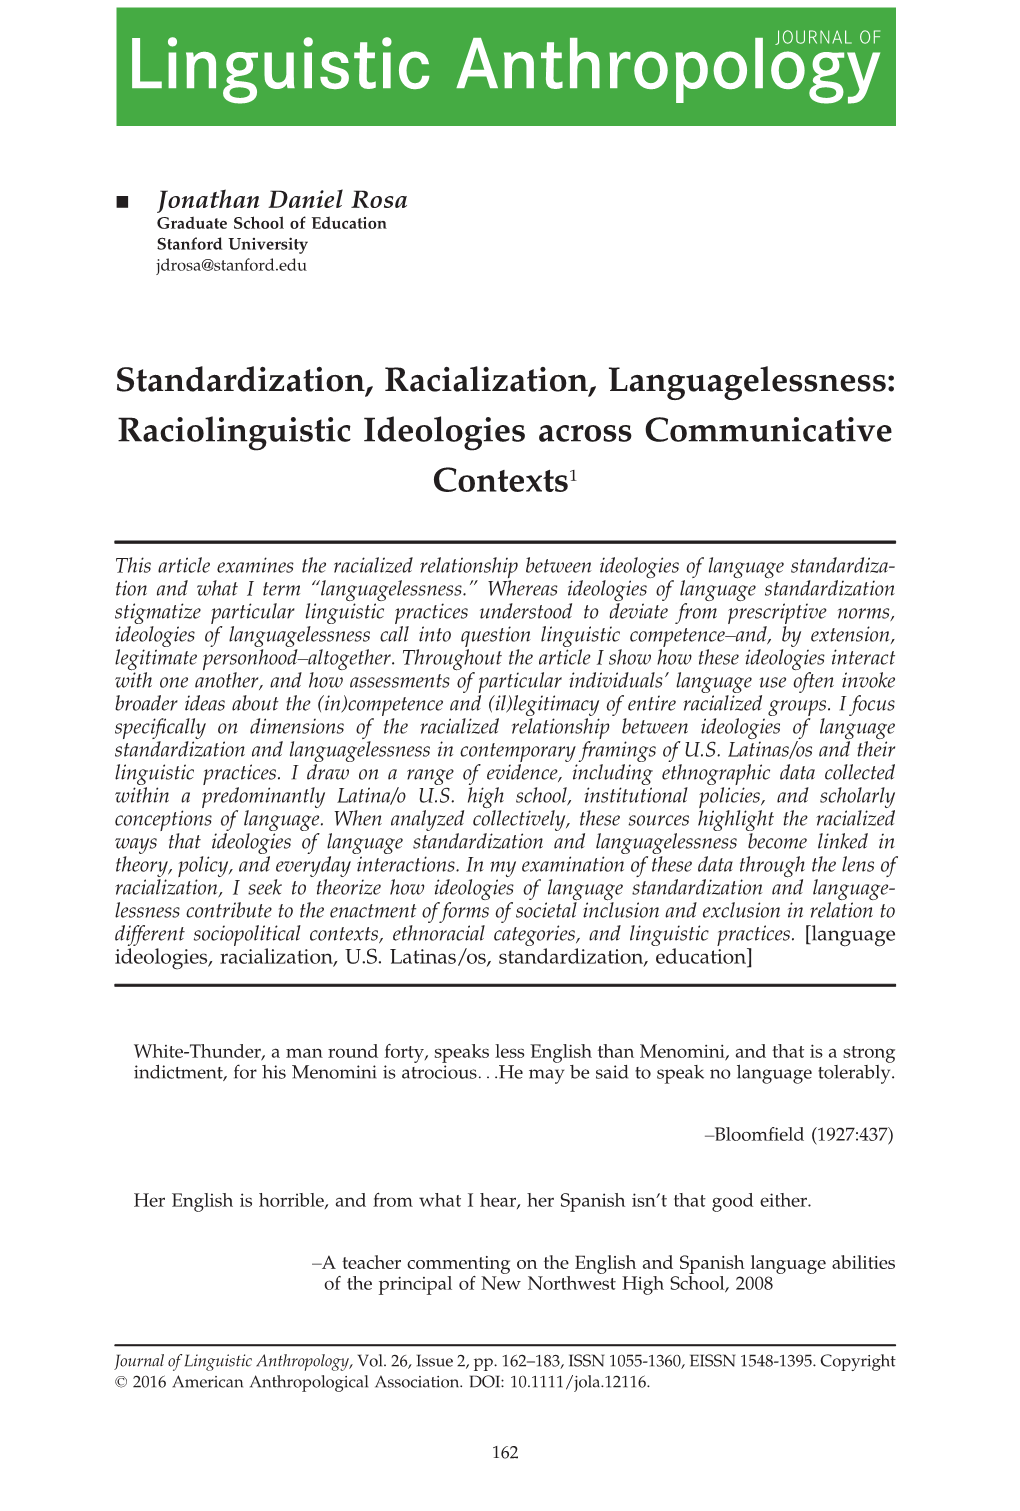 Standardization, Racialization, Languagelessness: Raciolinguistic Ideologies Across Communicative Contexts